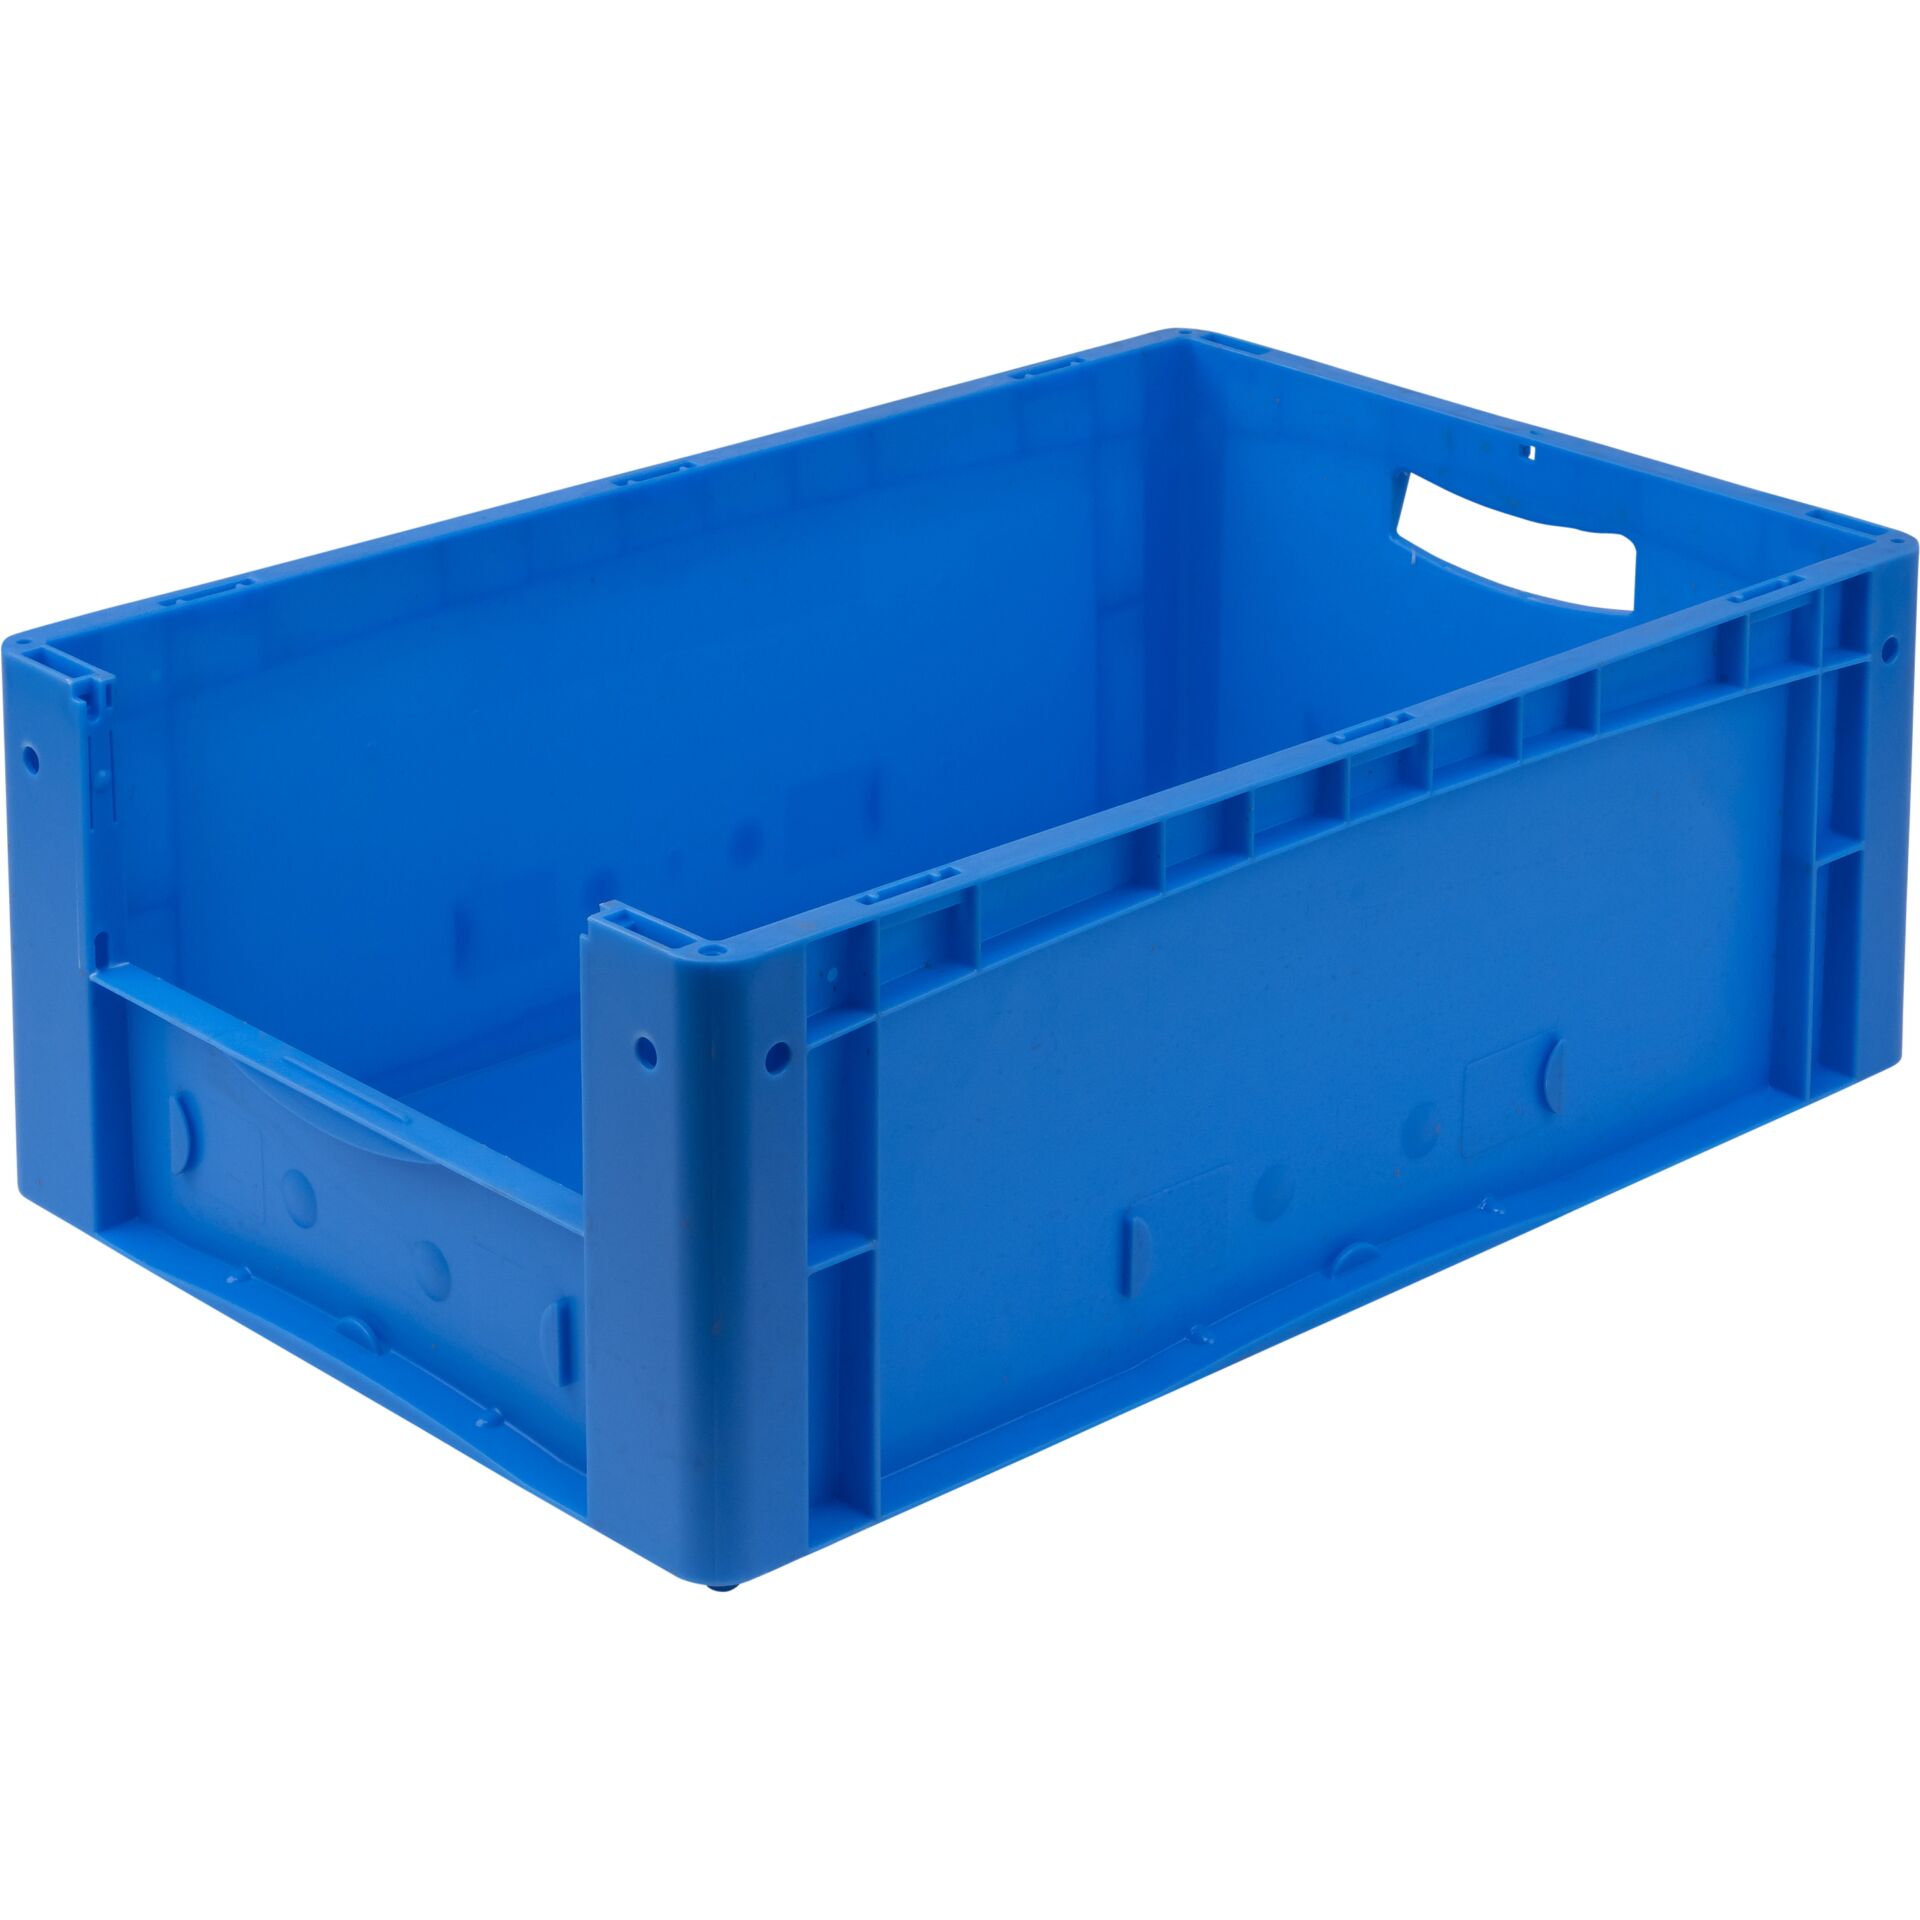 BITO Euro-stacking box XL 600x400x220mm blue 64224